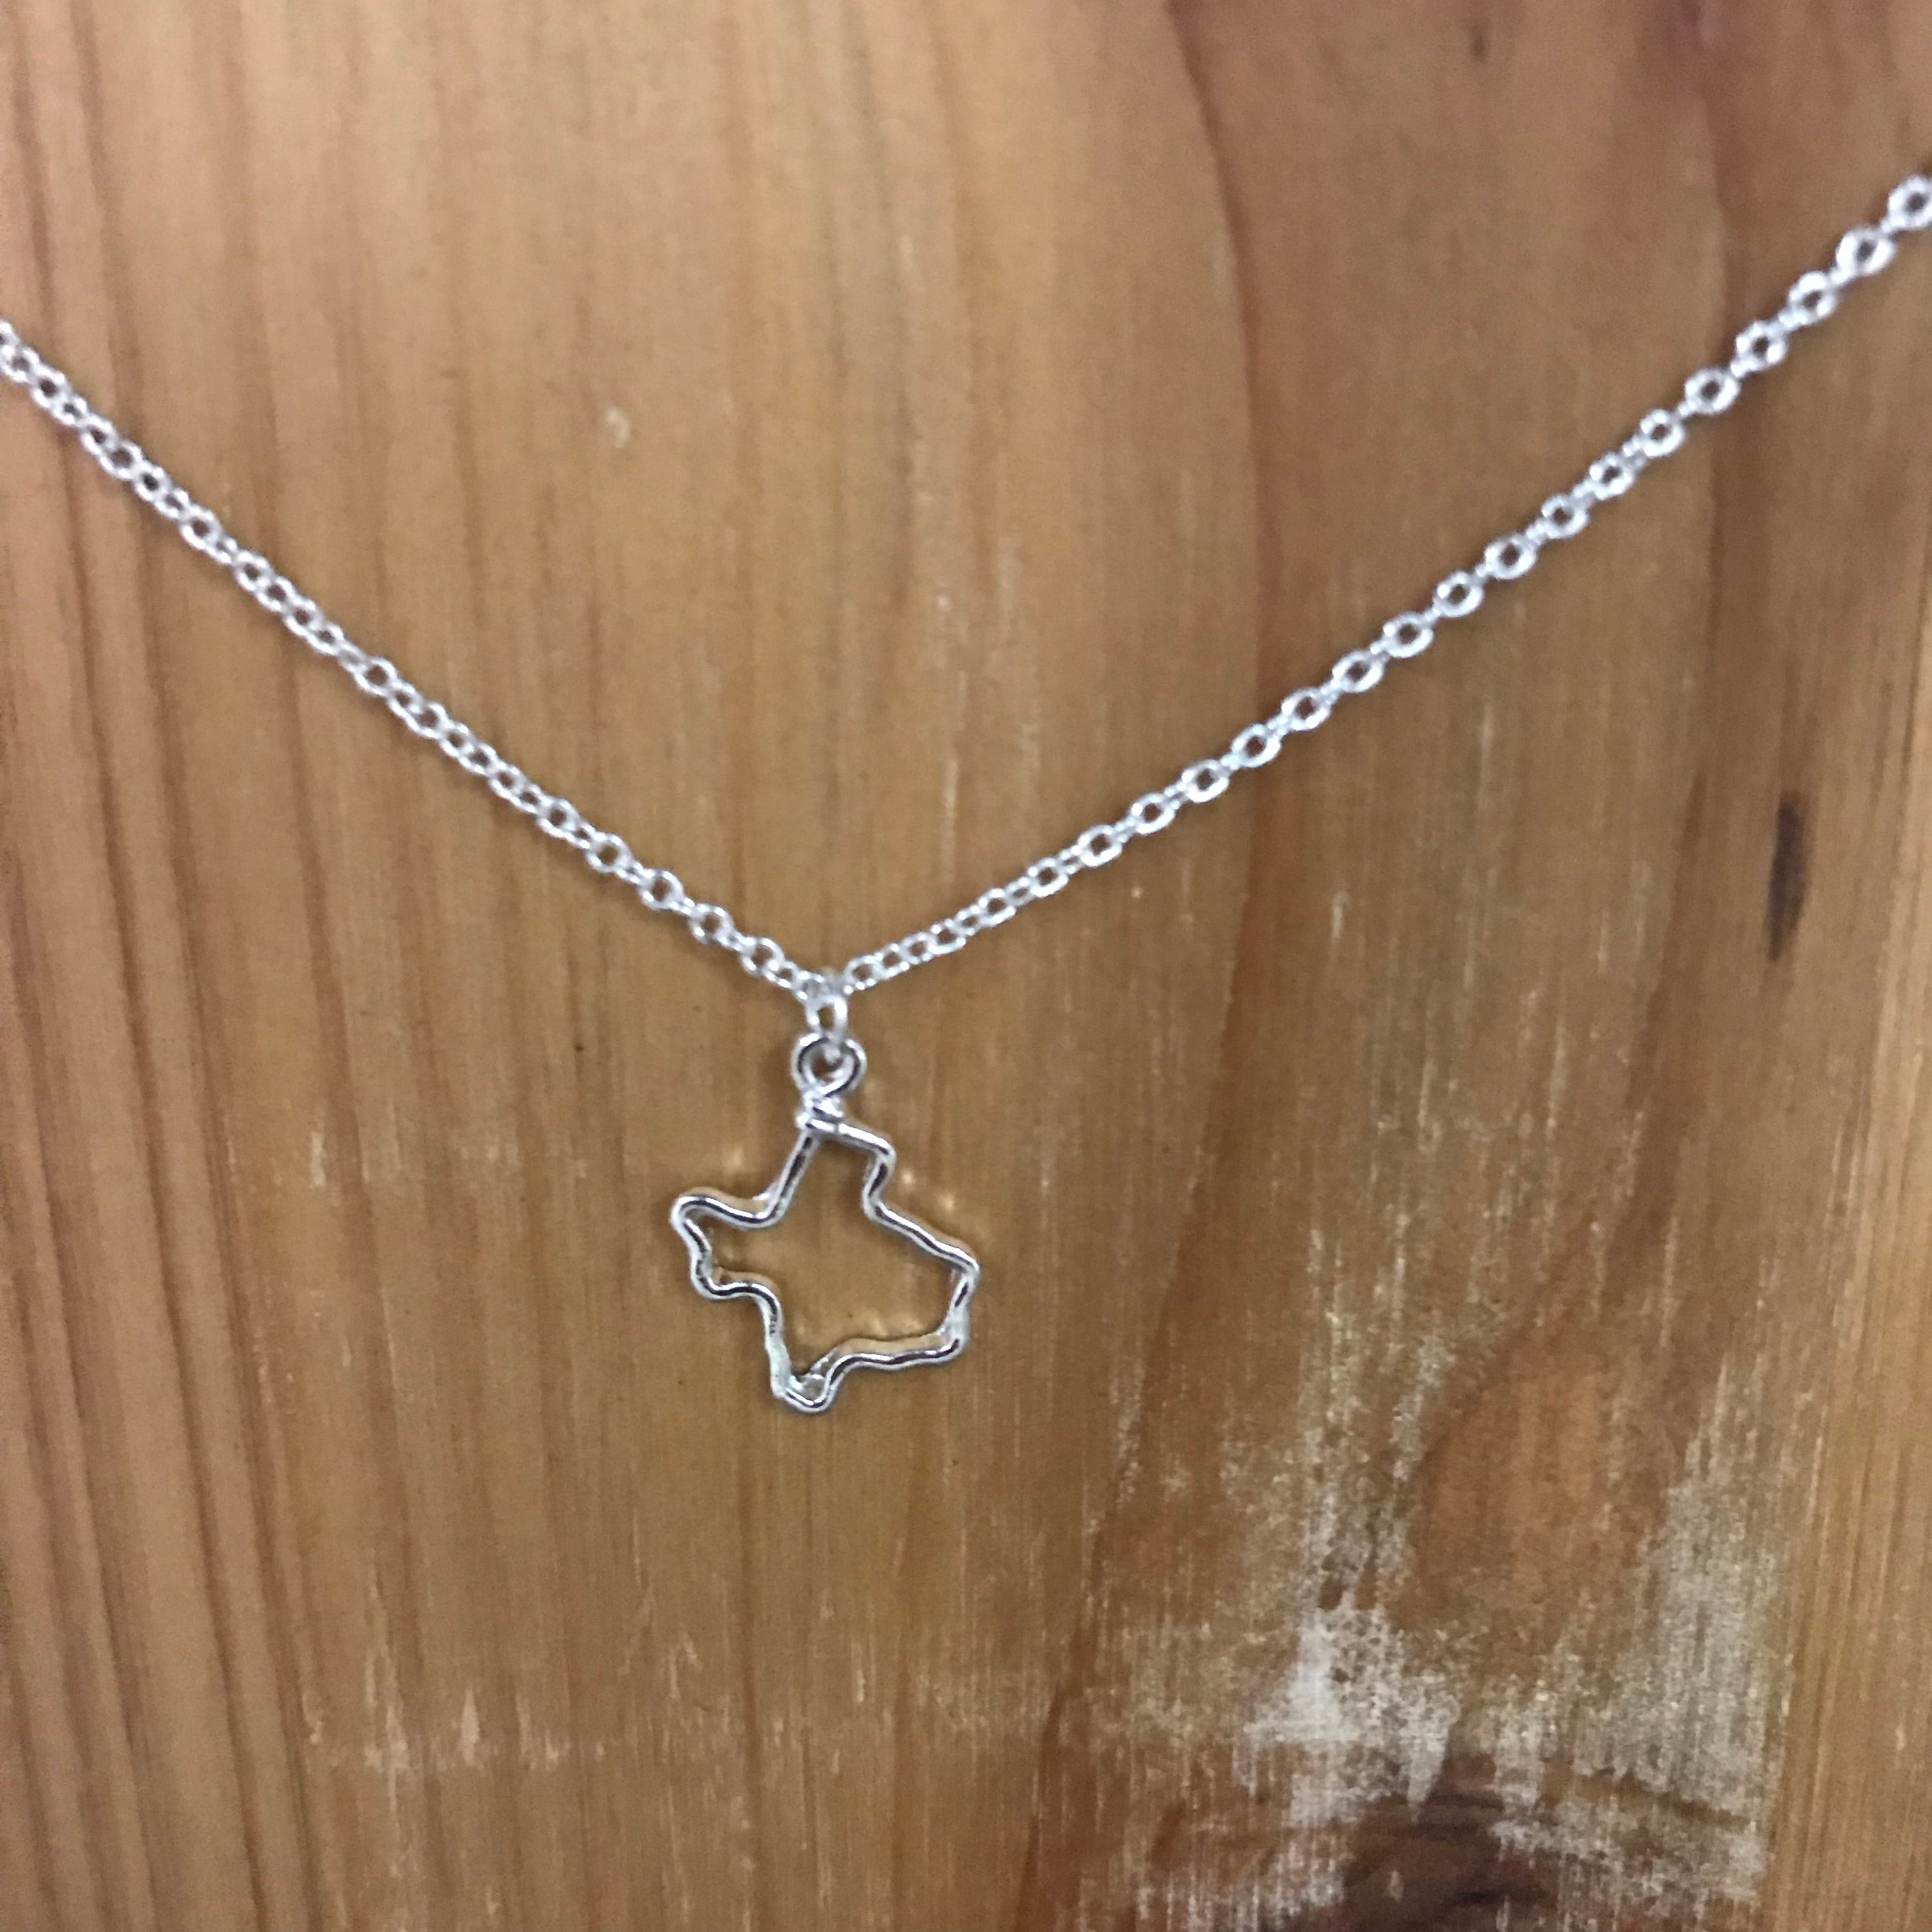 Texas shape charm necklace